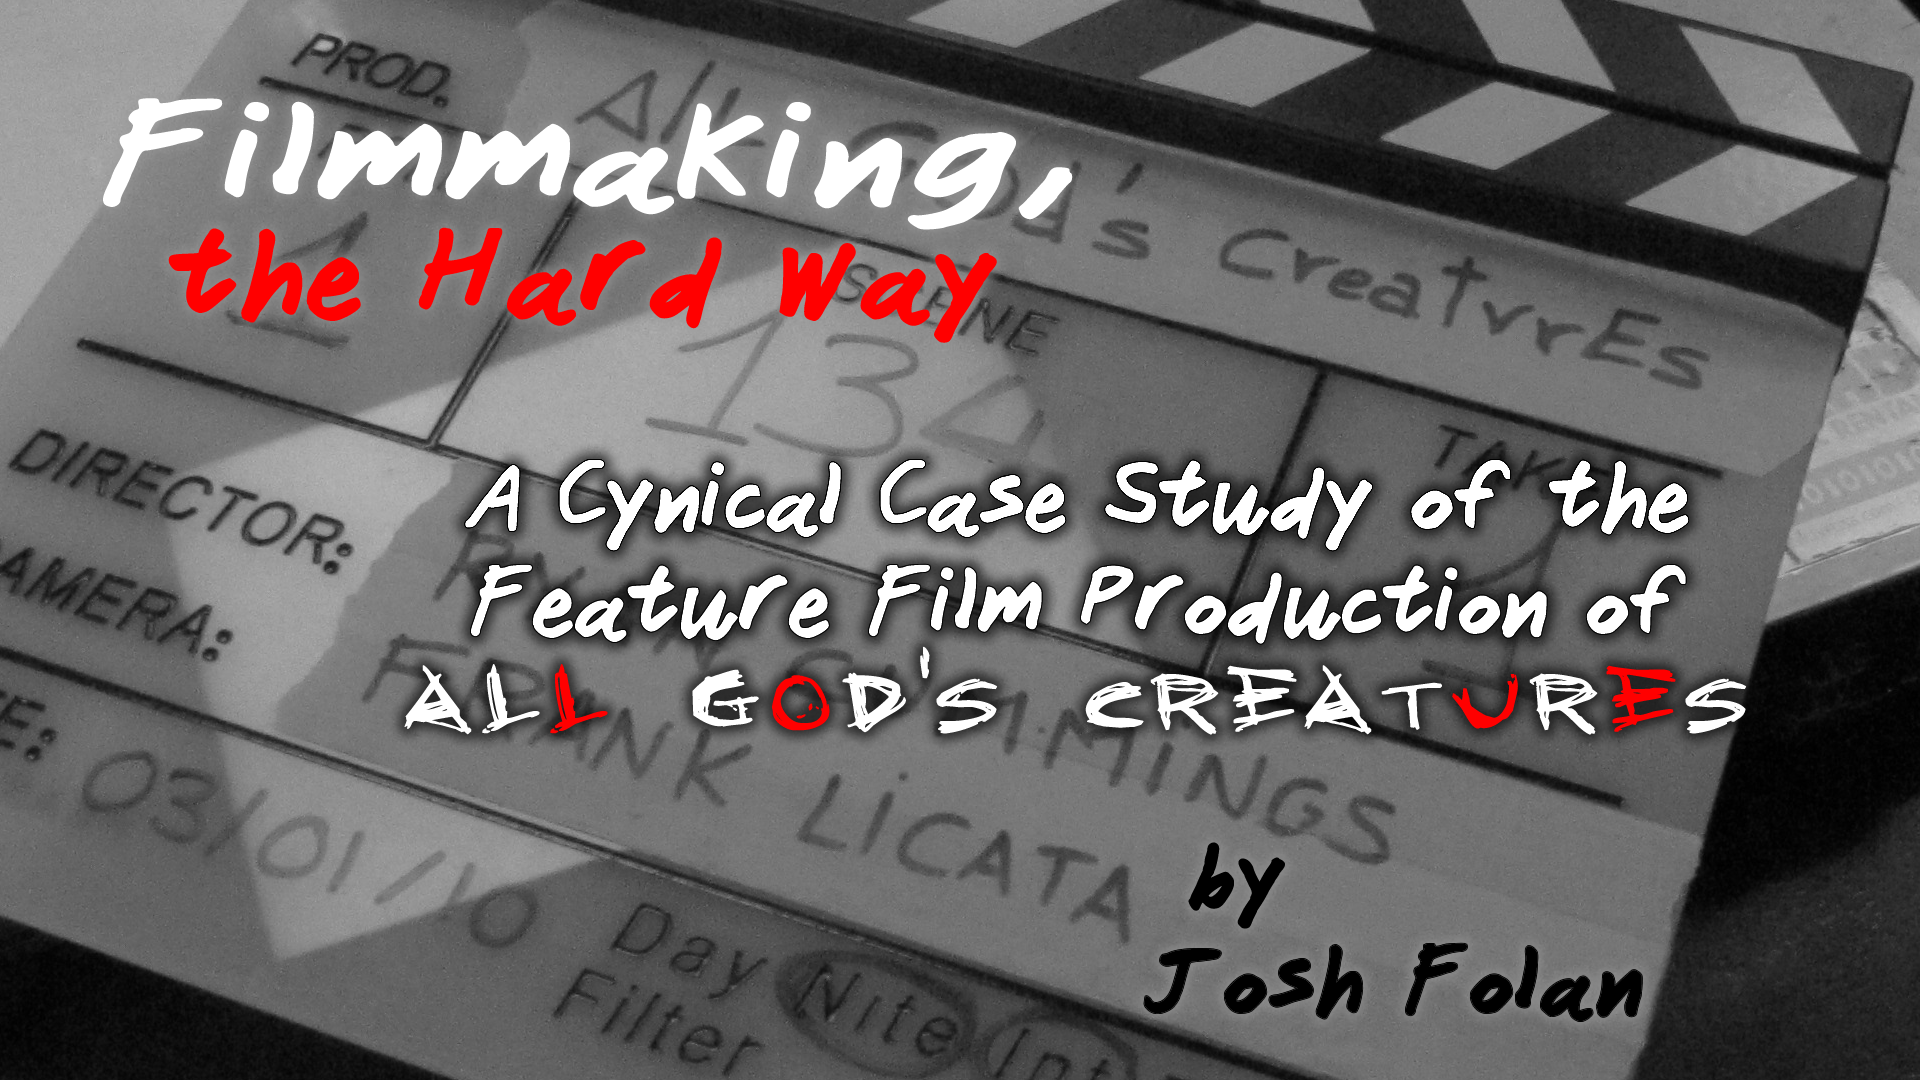 Filmmaking, the Hard Way by Josh Folan